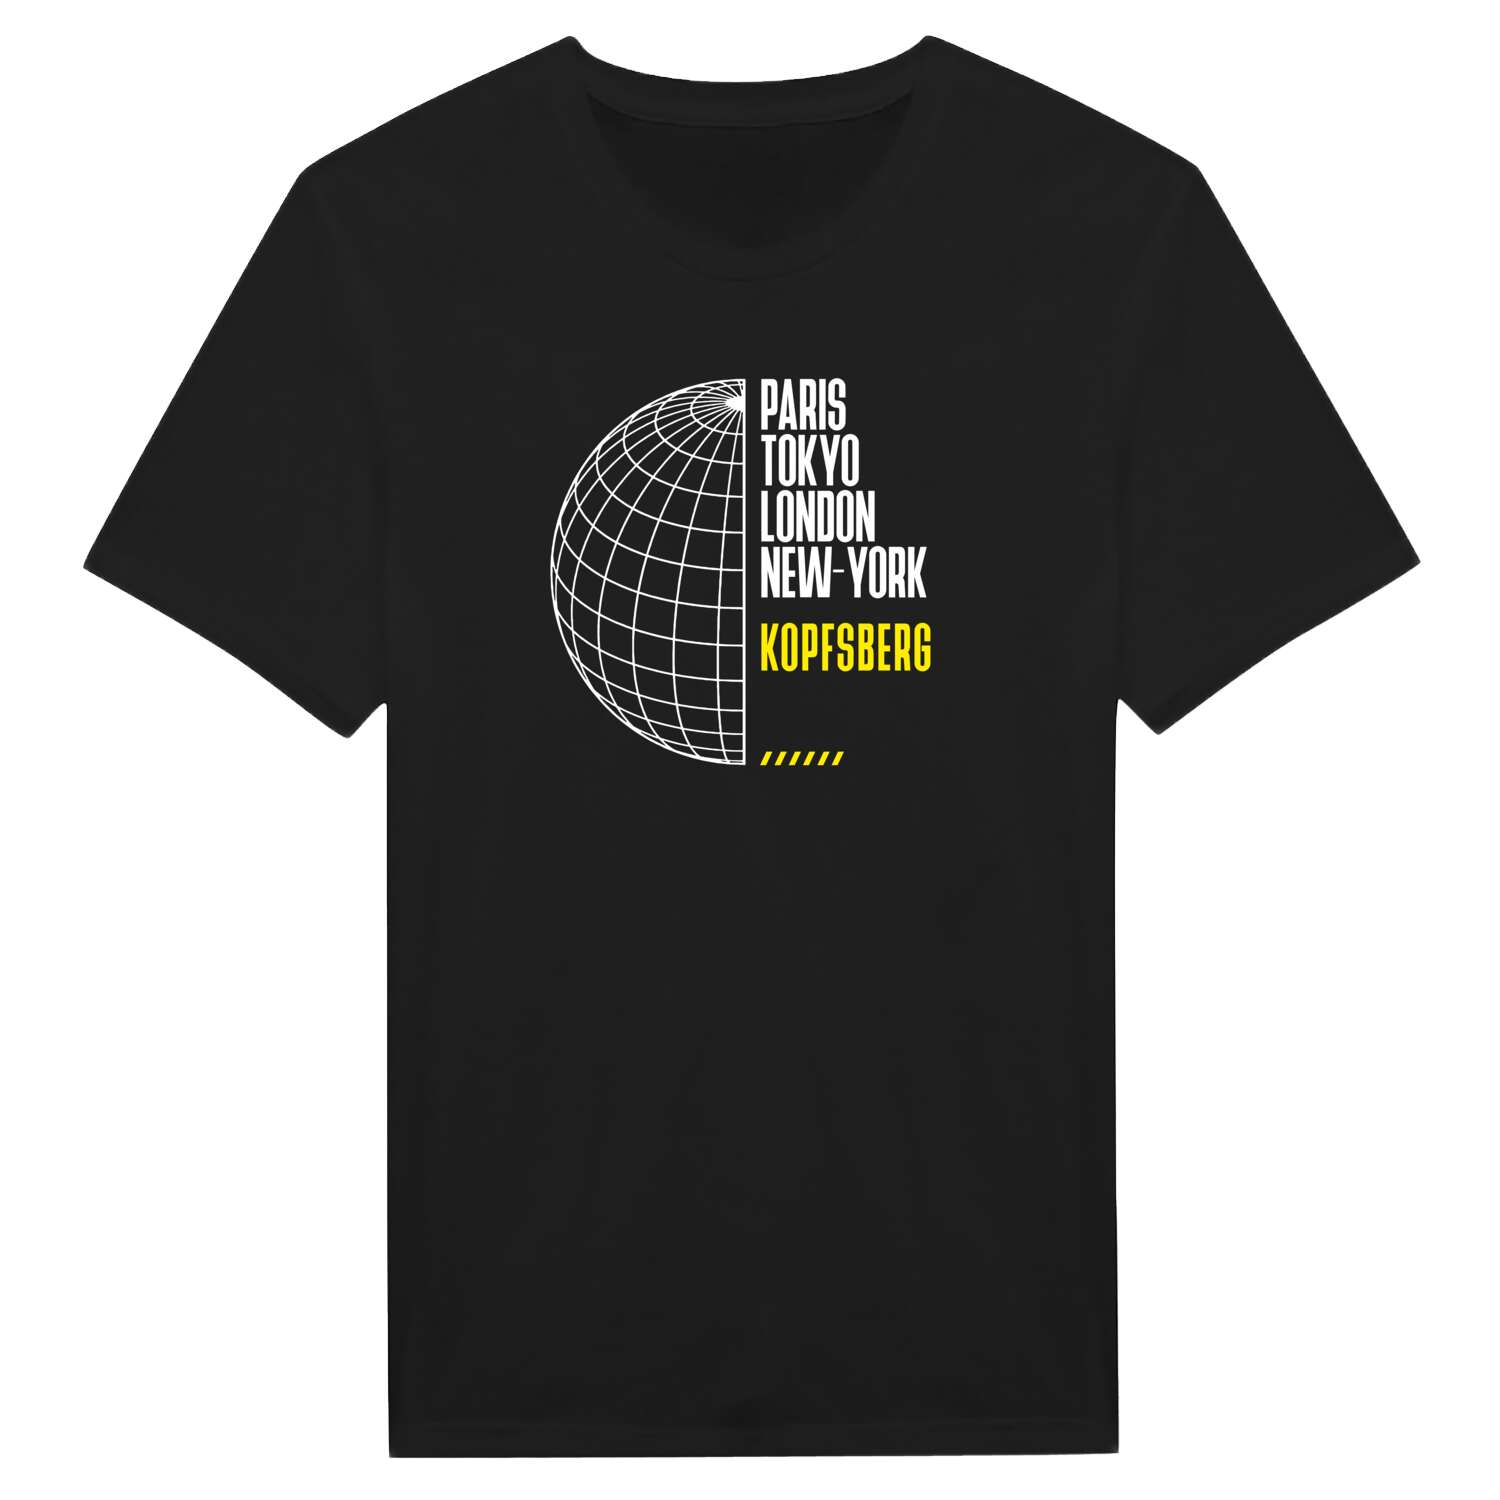 Kopfsberg T-Shirt »Paris Tokyo London«